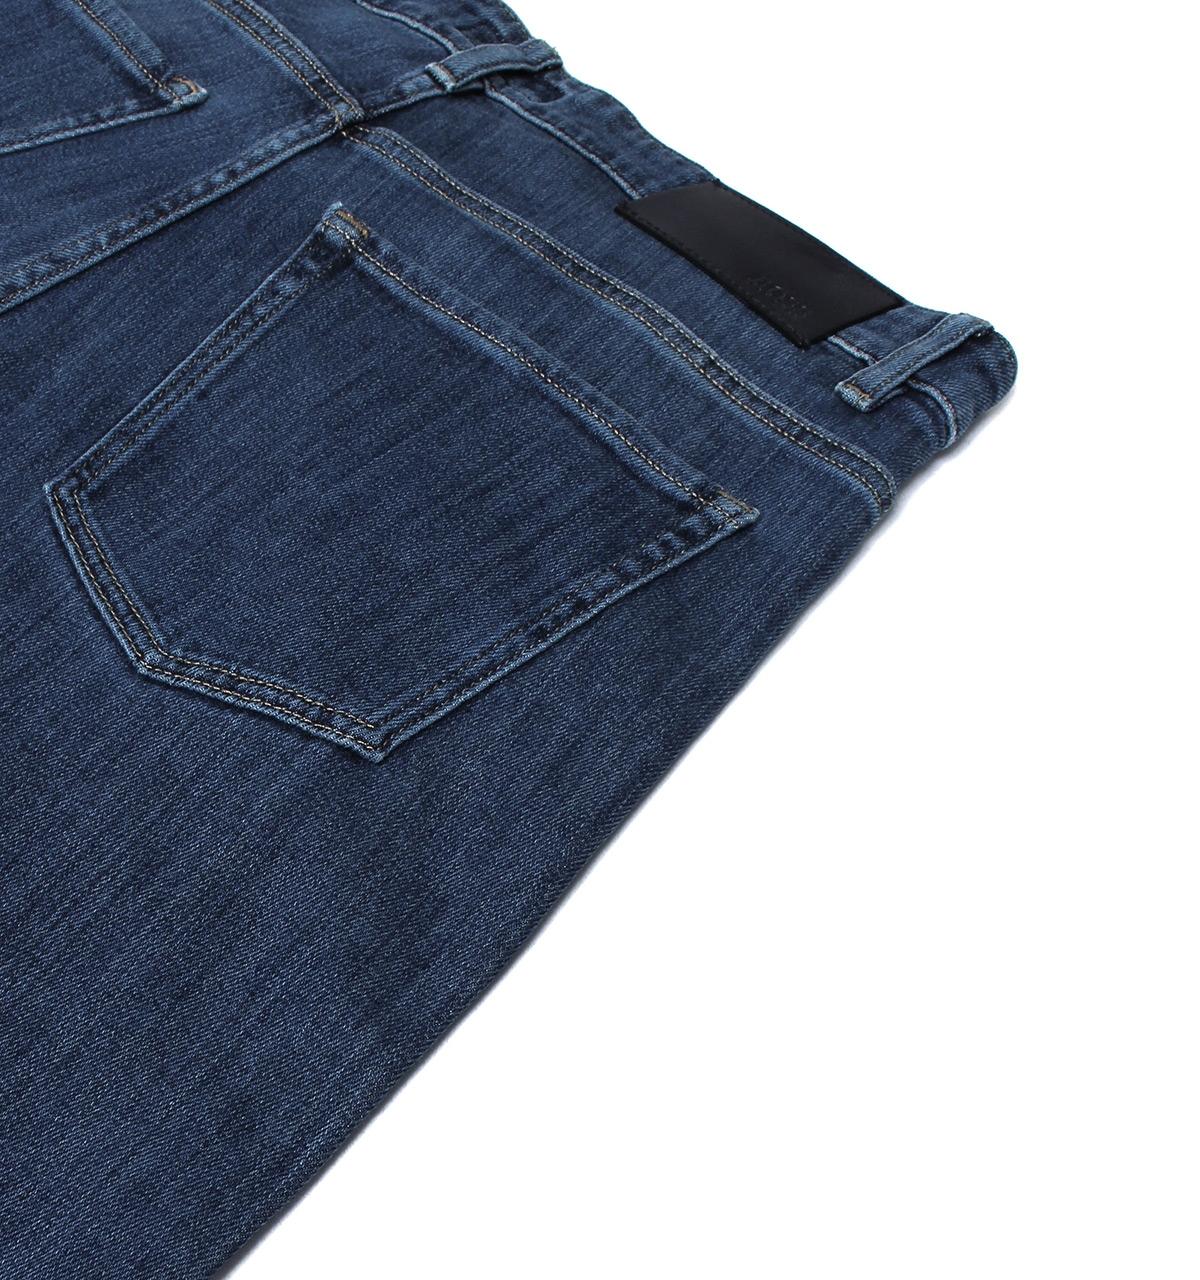 BOSS by HUGO BOSS Delaware 3-1 Mid Wash Blue Stretch Denim Slim Fit Jeans  for Men - Lyst